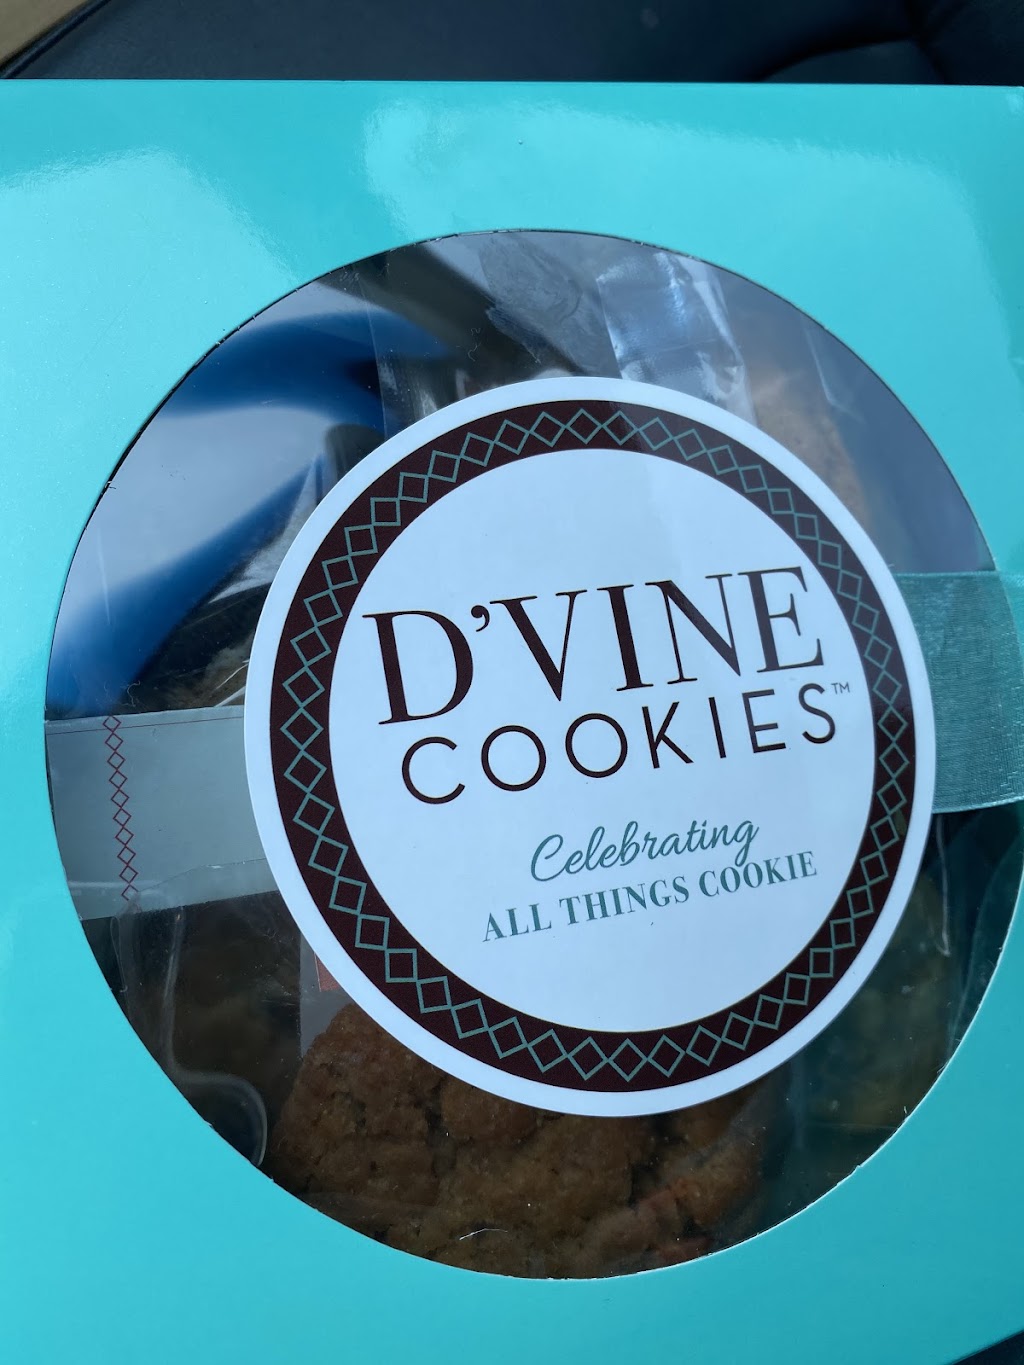 DVINE Cookies | 21740 Trolley Industrial Dr, Taylor, MI 48180, USA | Phone: (844) 384-6300